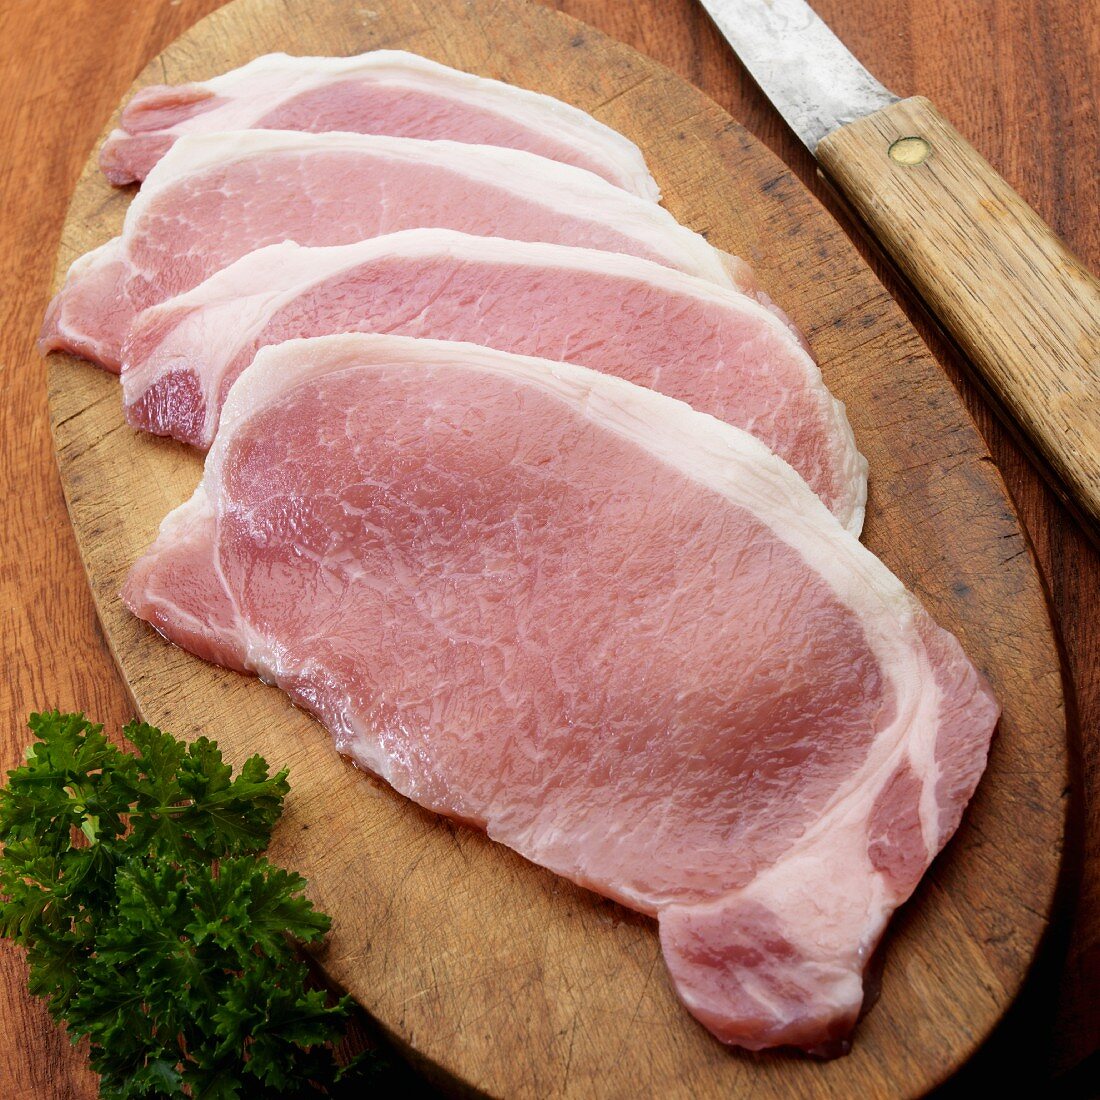 Raw English style bacon on cutting board